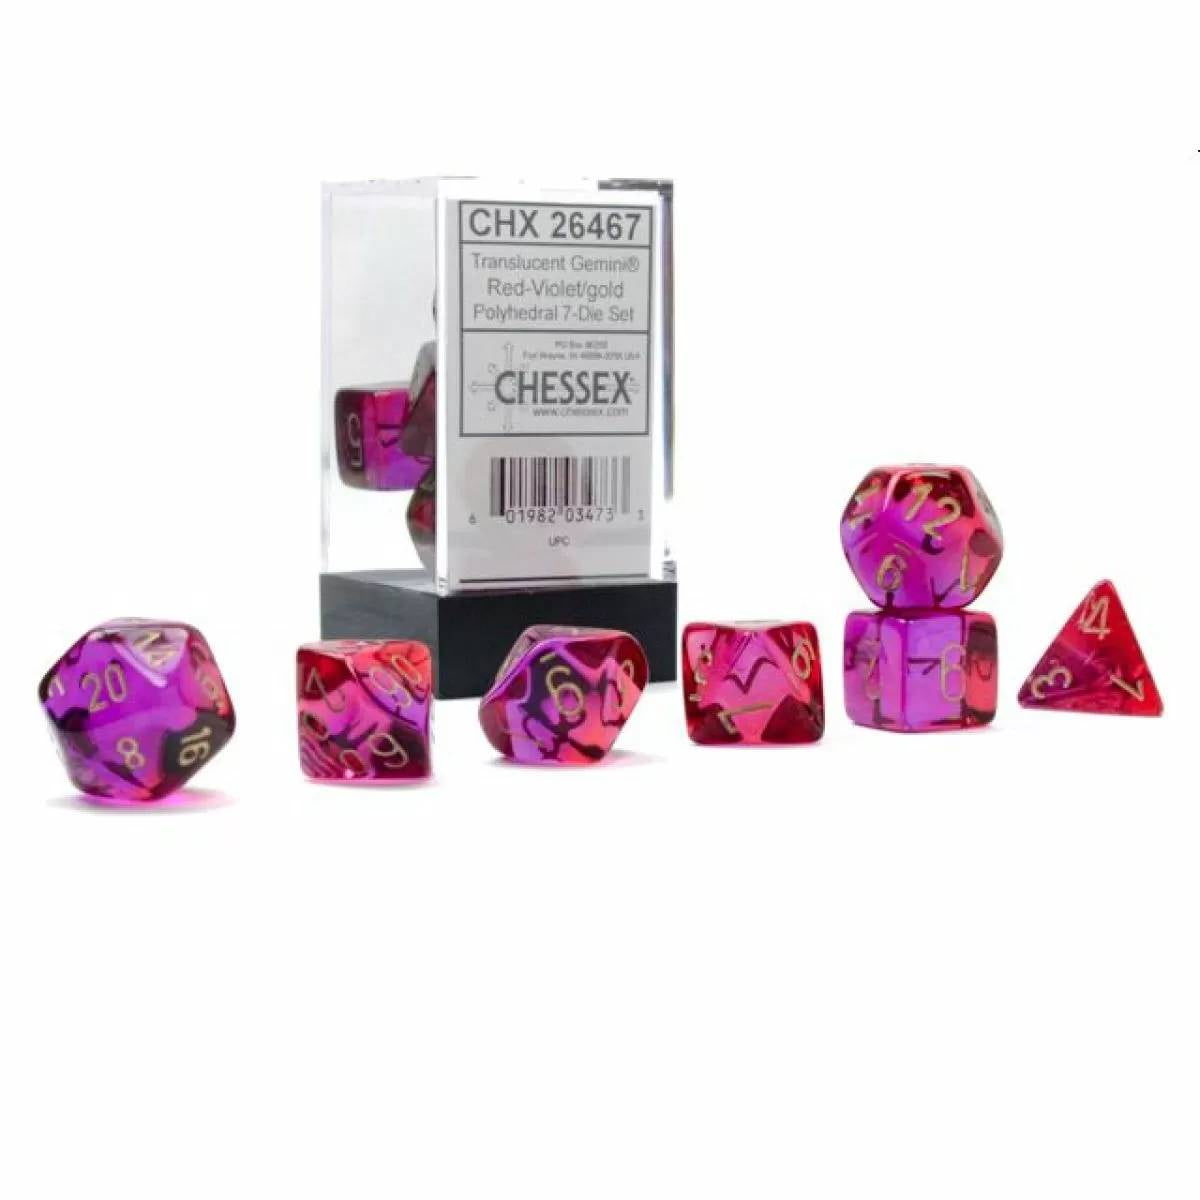 Chessex - Gemini Translucent Red-Violet/gold 7-Die Set (CHX 26467)